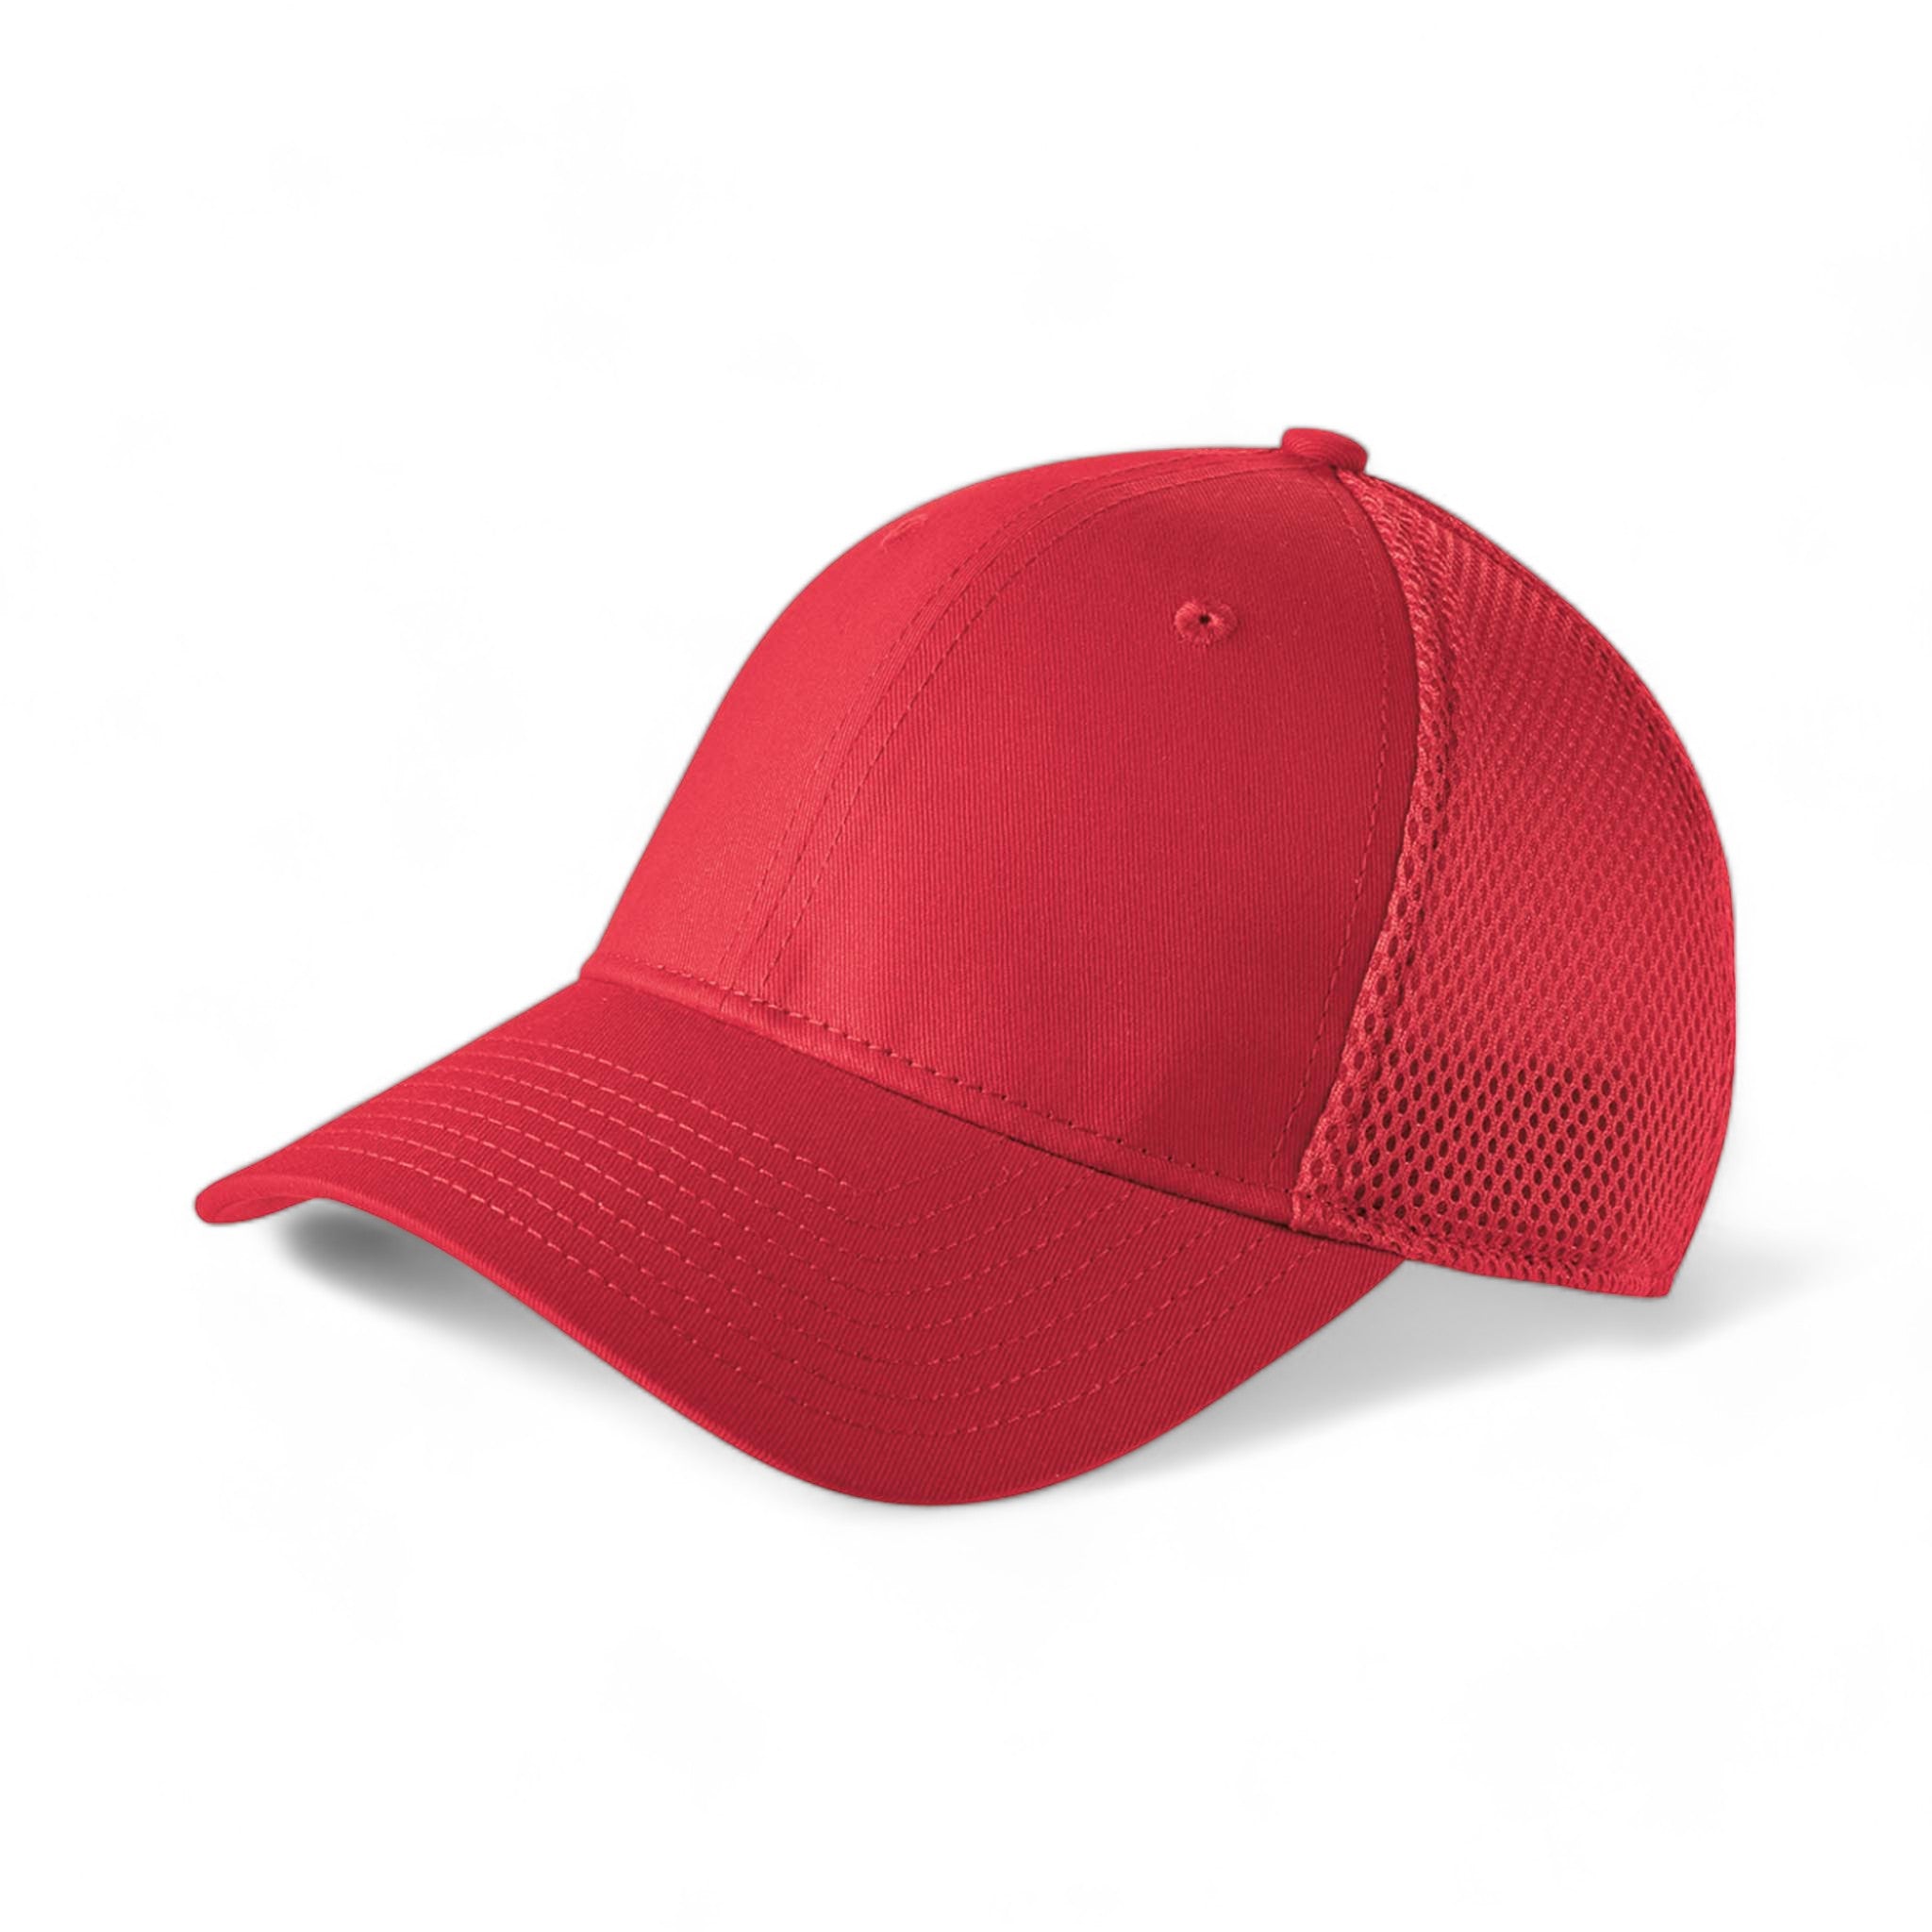 Side view of New Era NE1020 custom hat in scarlet red